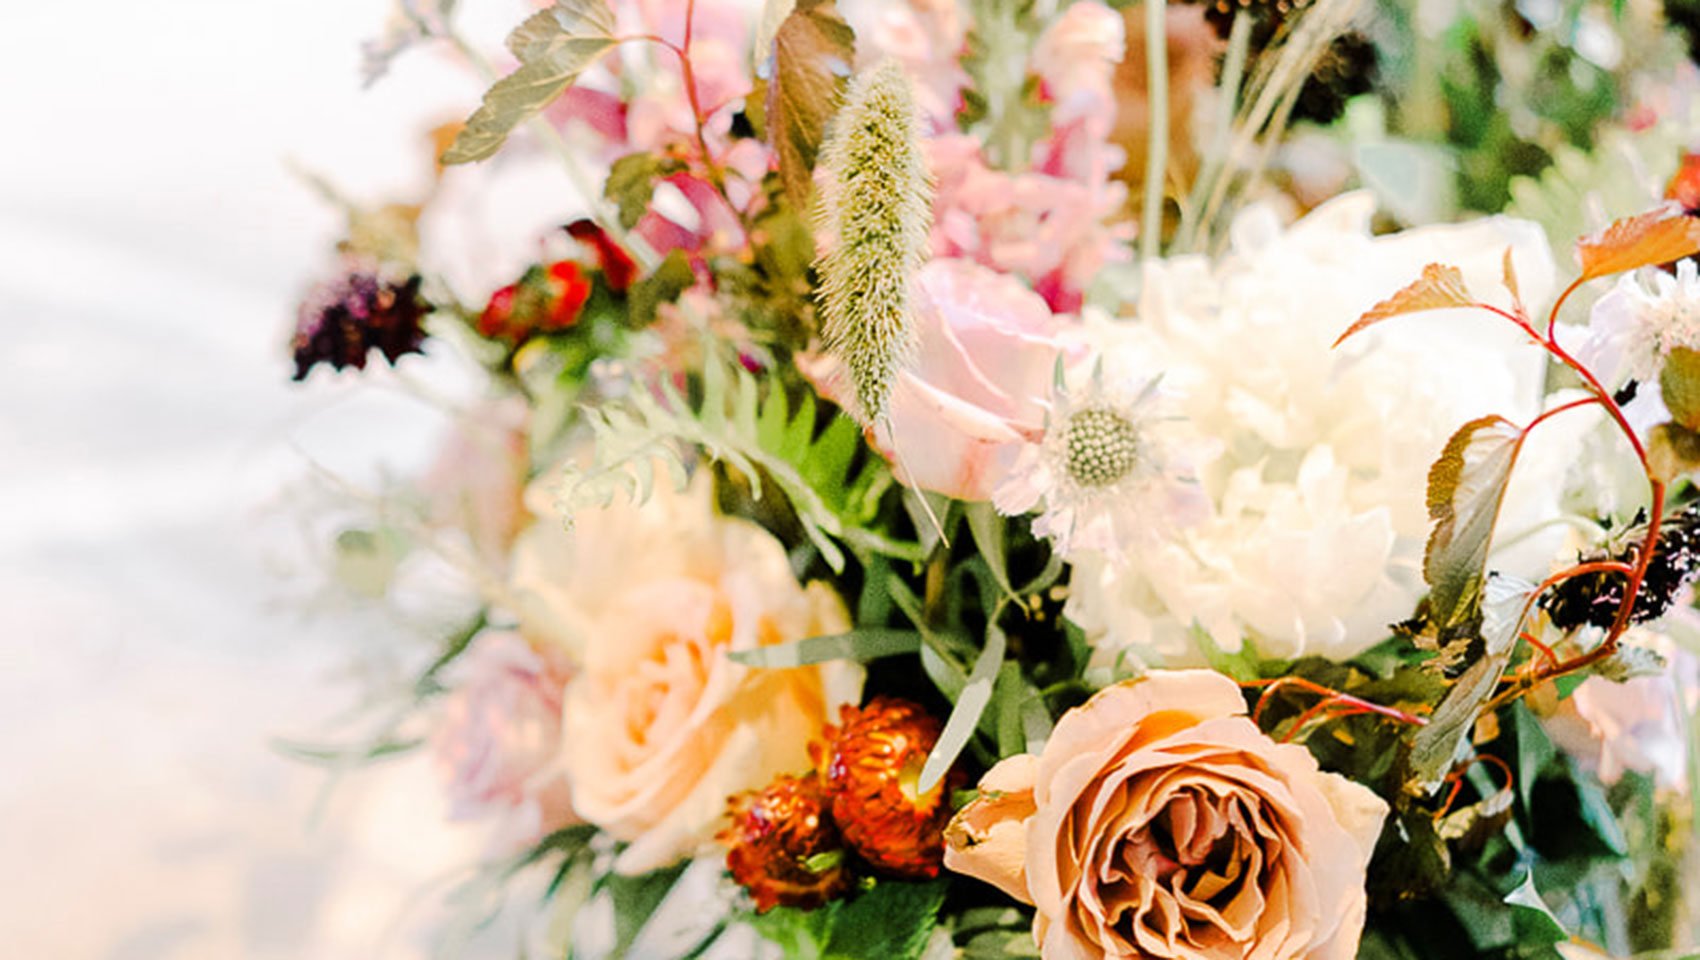 wedding aisle flowers